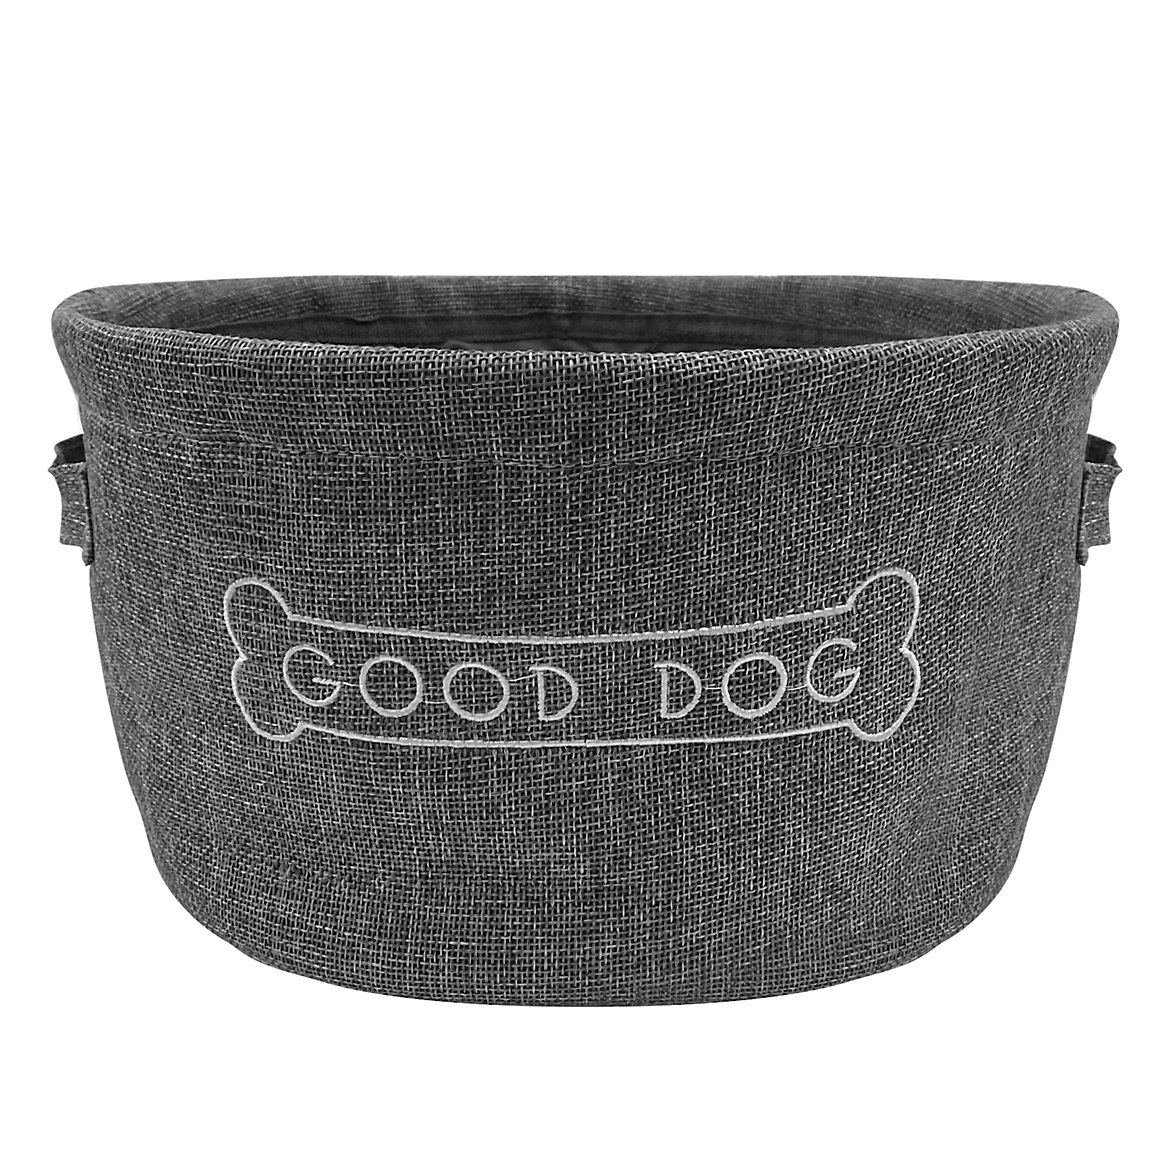 Woof "Good Dog" Dog Toy Bin